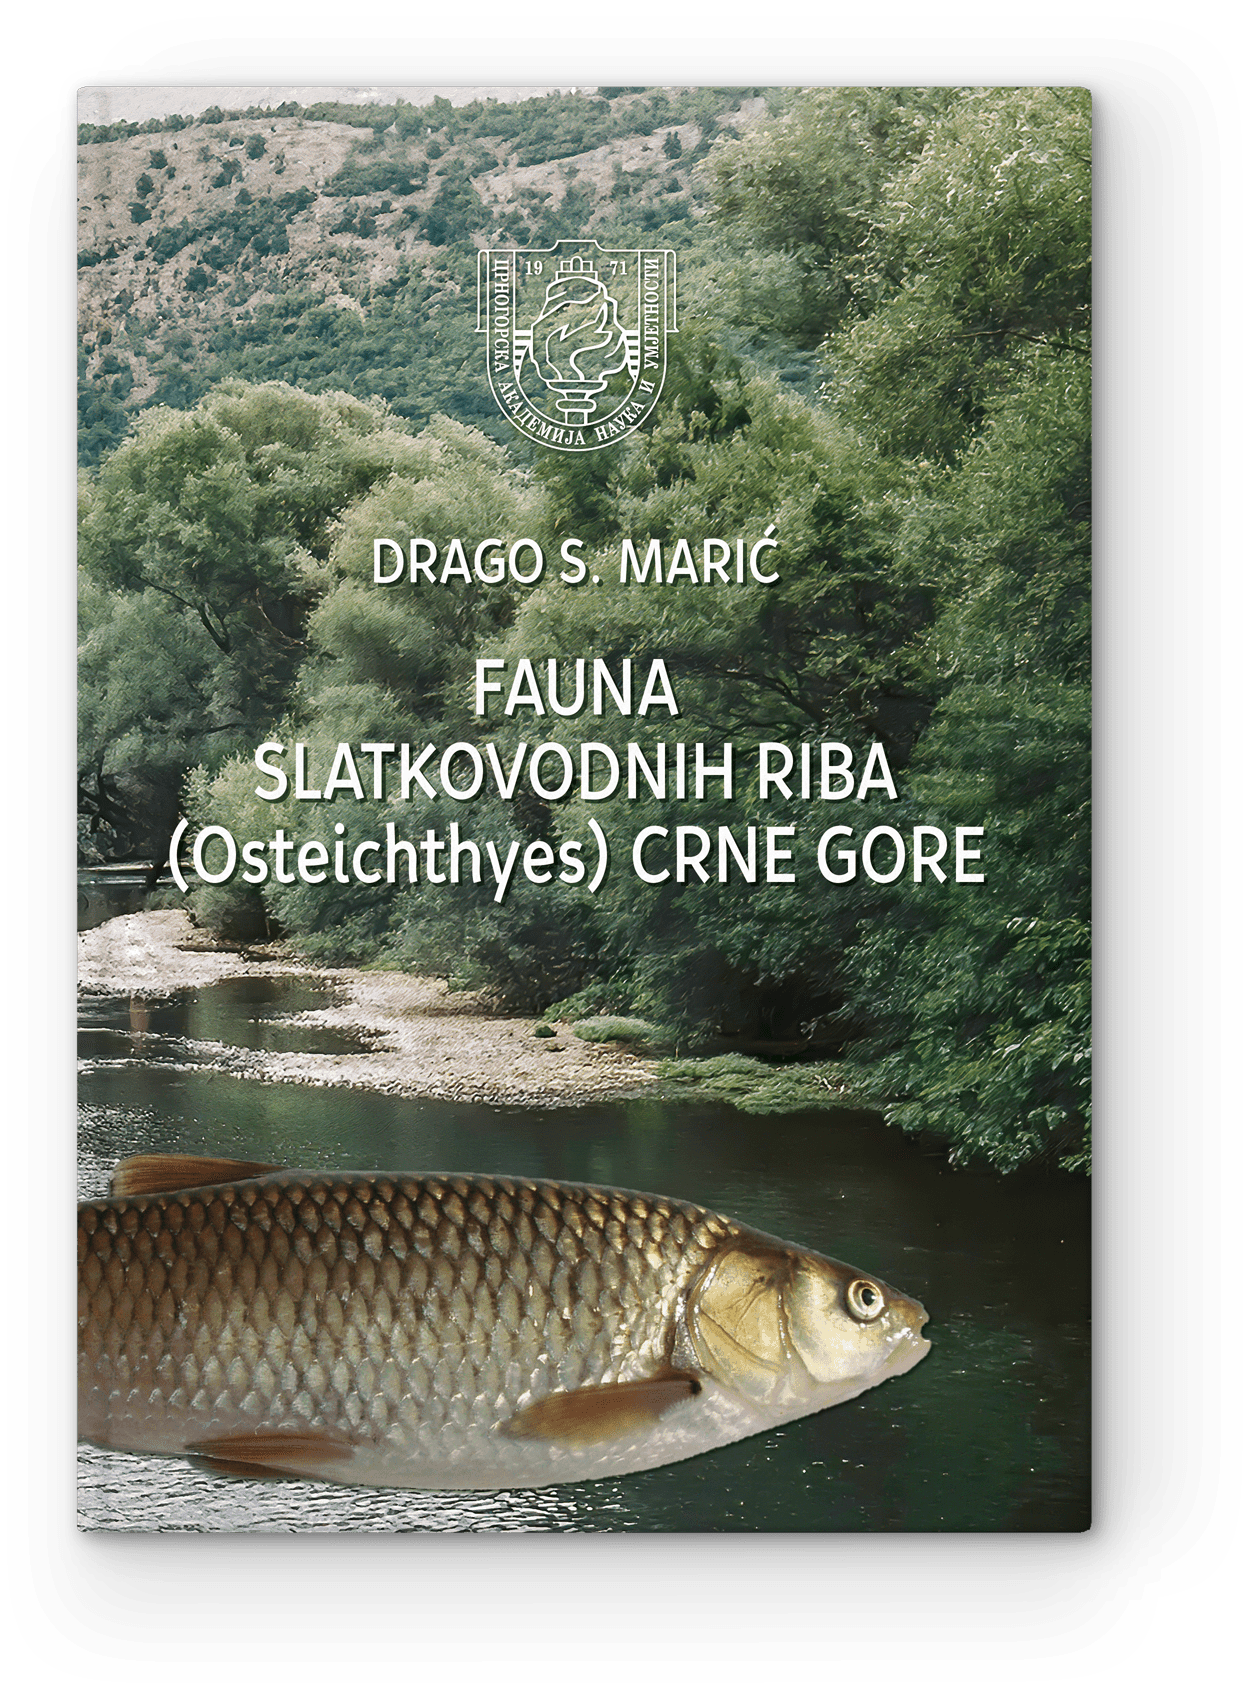 685-DM-Fauna-sl-riba-CG